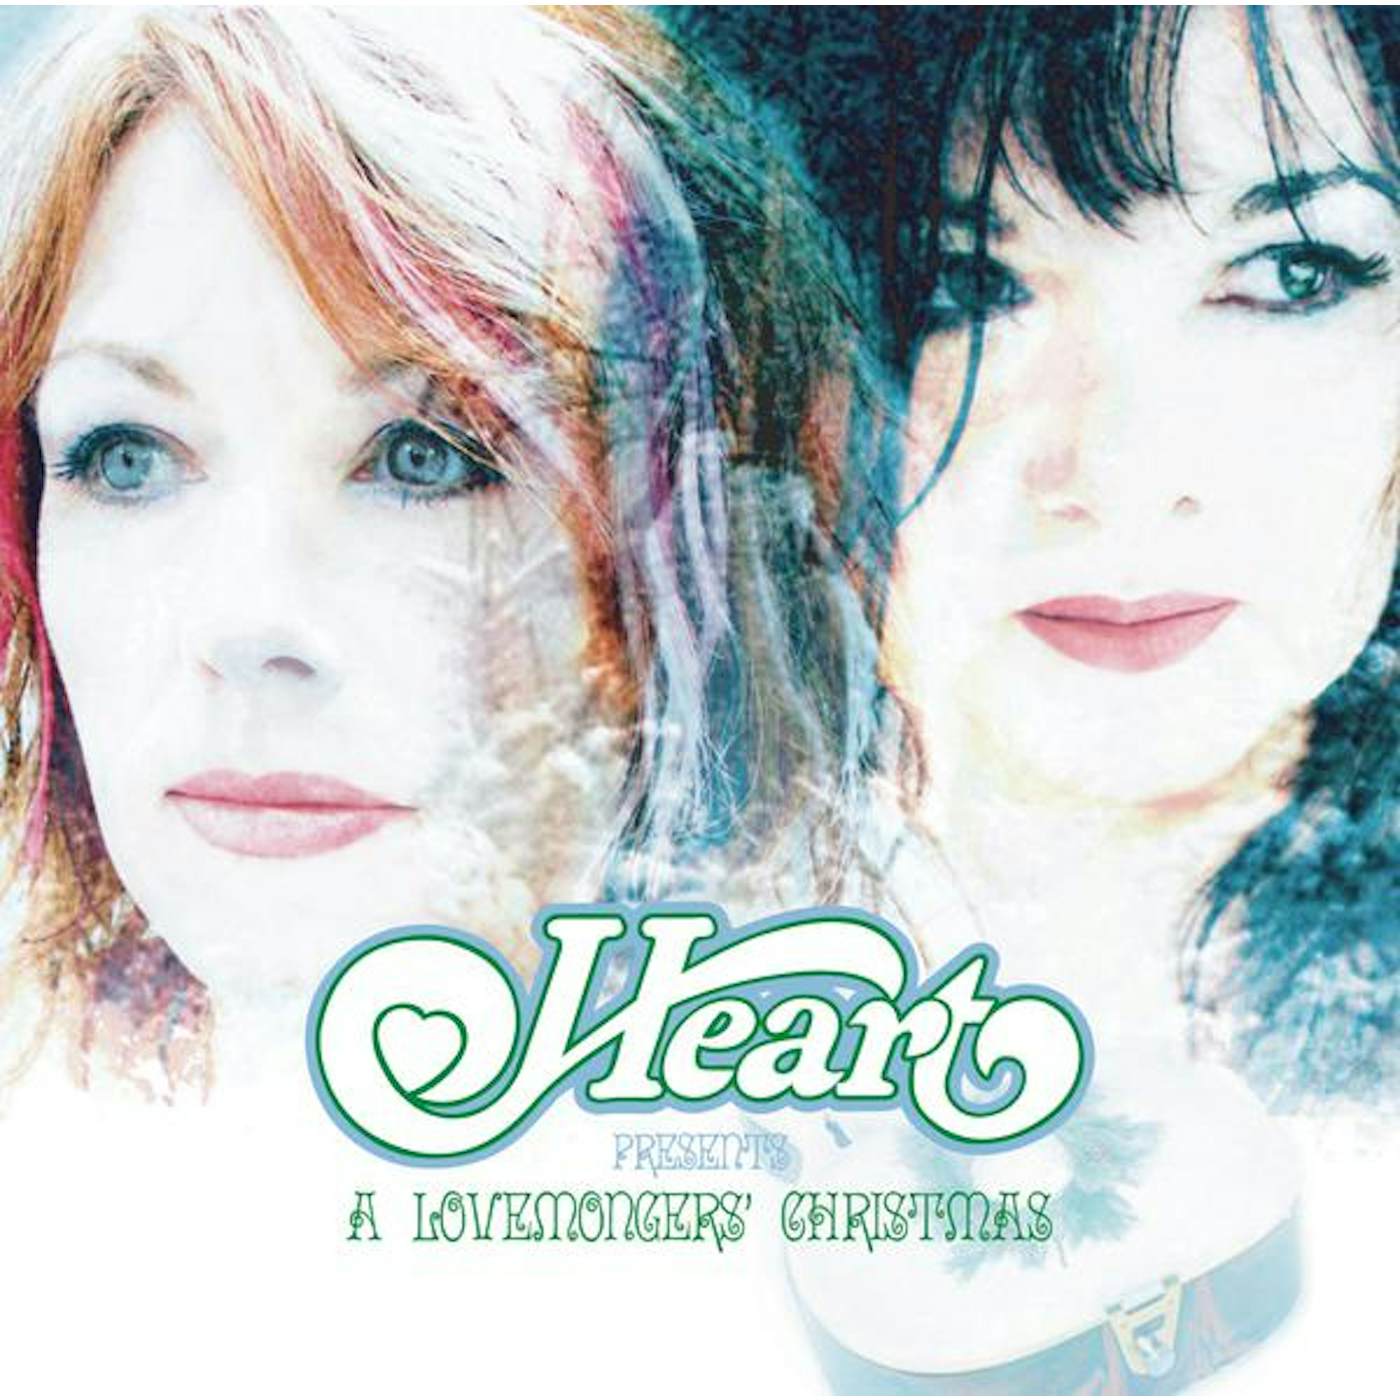 HEART PRESENTS A LOVEMONGERS' CHRISTMAS CD